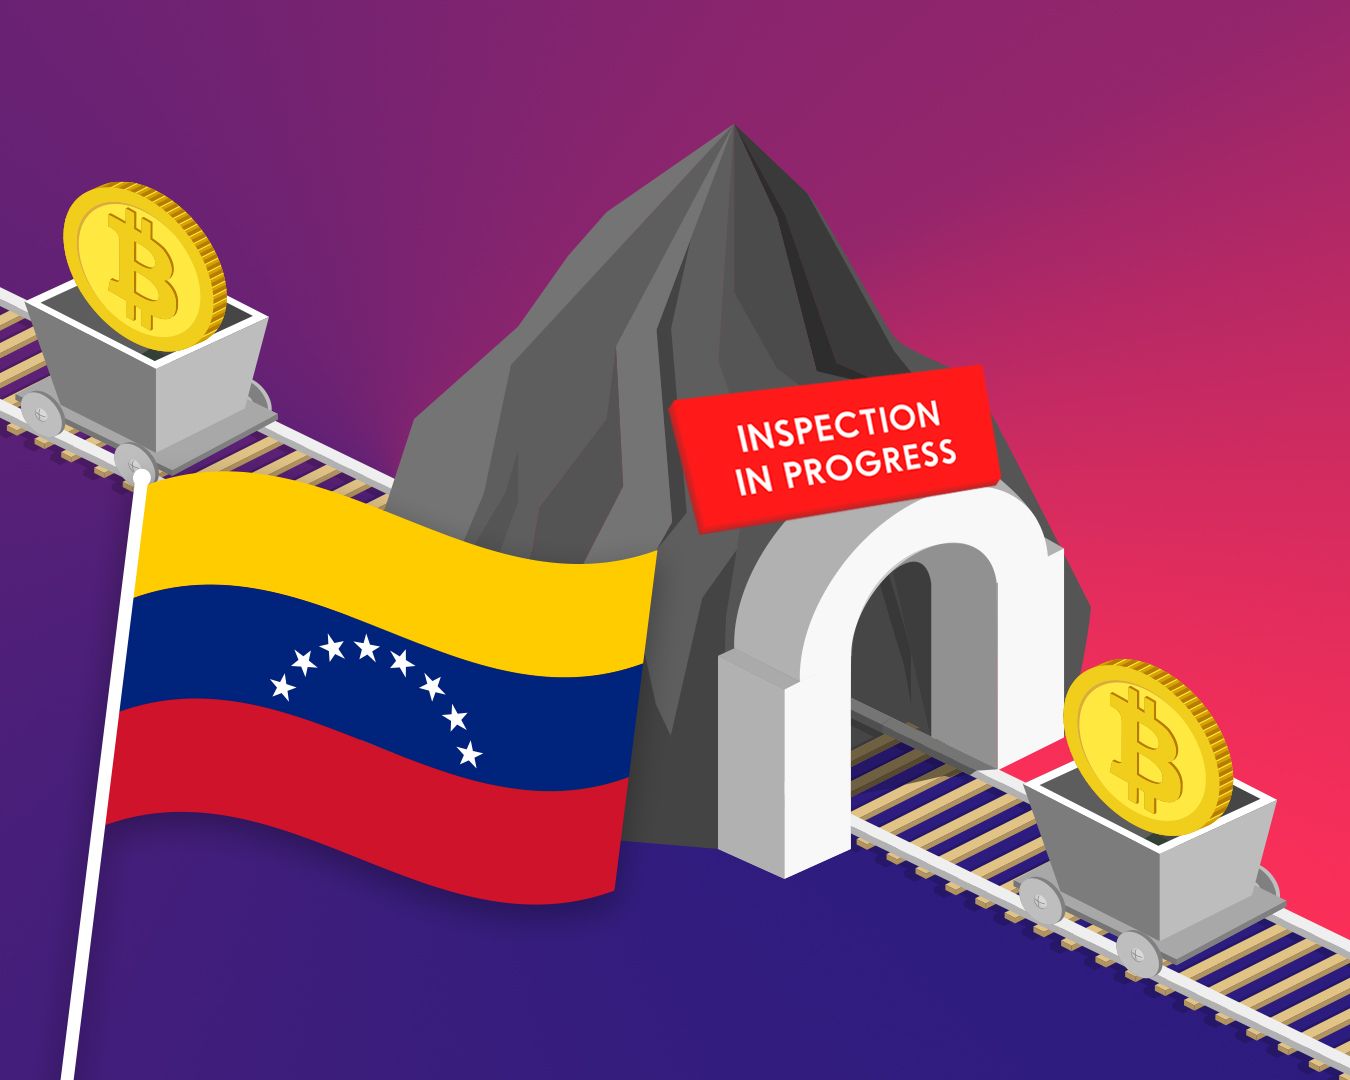 Venezuela Issues Law Regulating All Bitcoin Mining